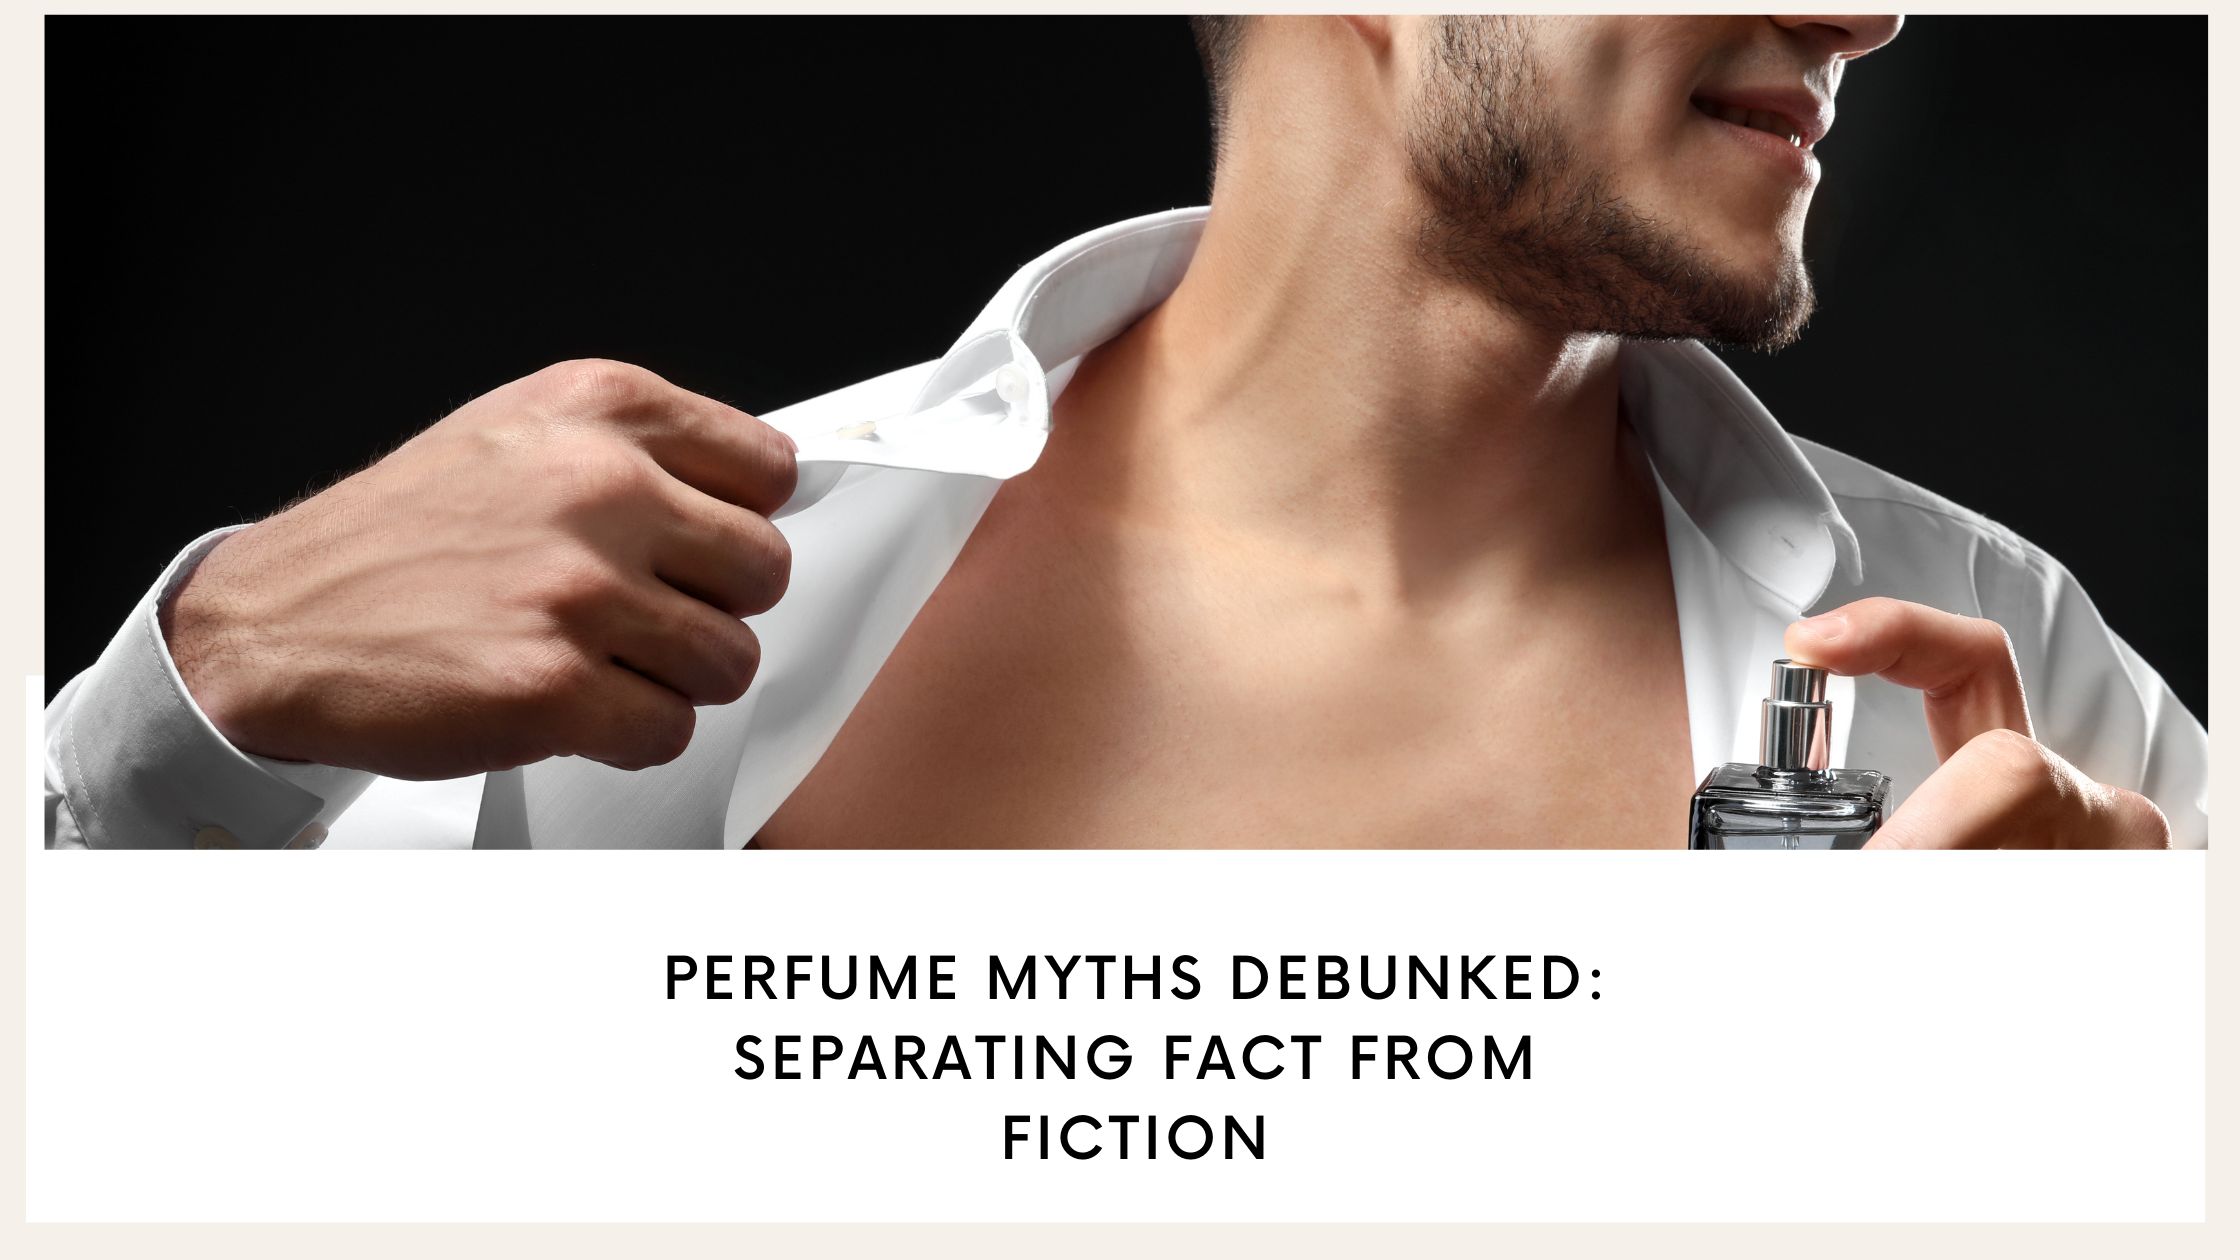 5 Perfume myths debunked